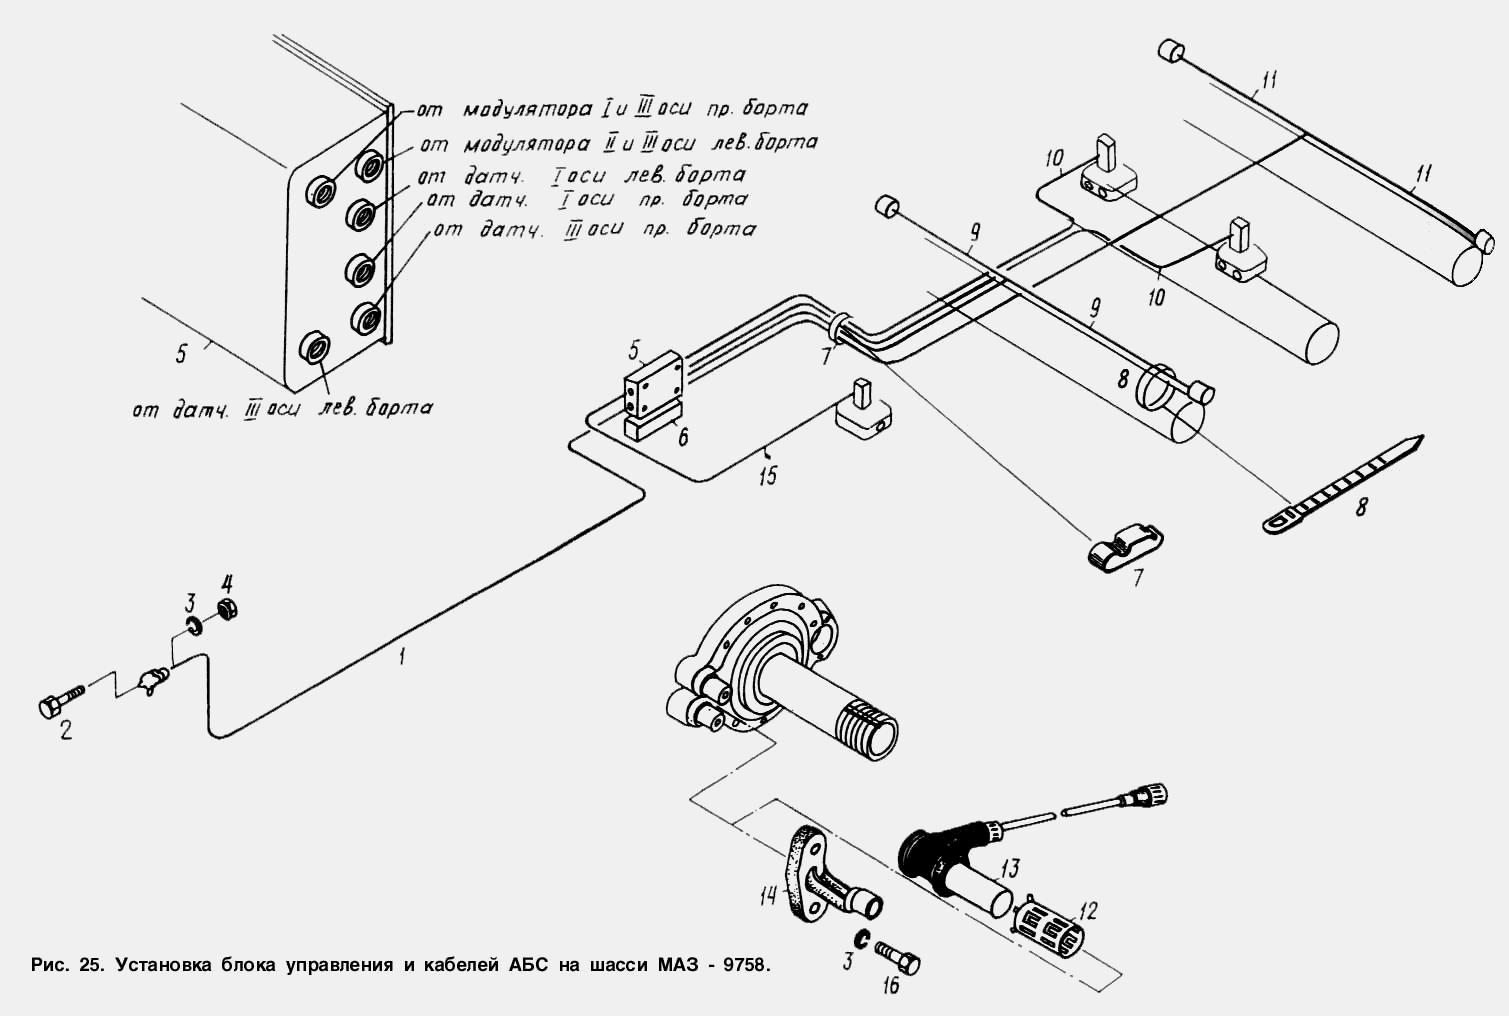 Установка блока управления и кабелей АБС на шасси МАЗ-9758 МАЗ  9758-30